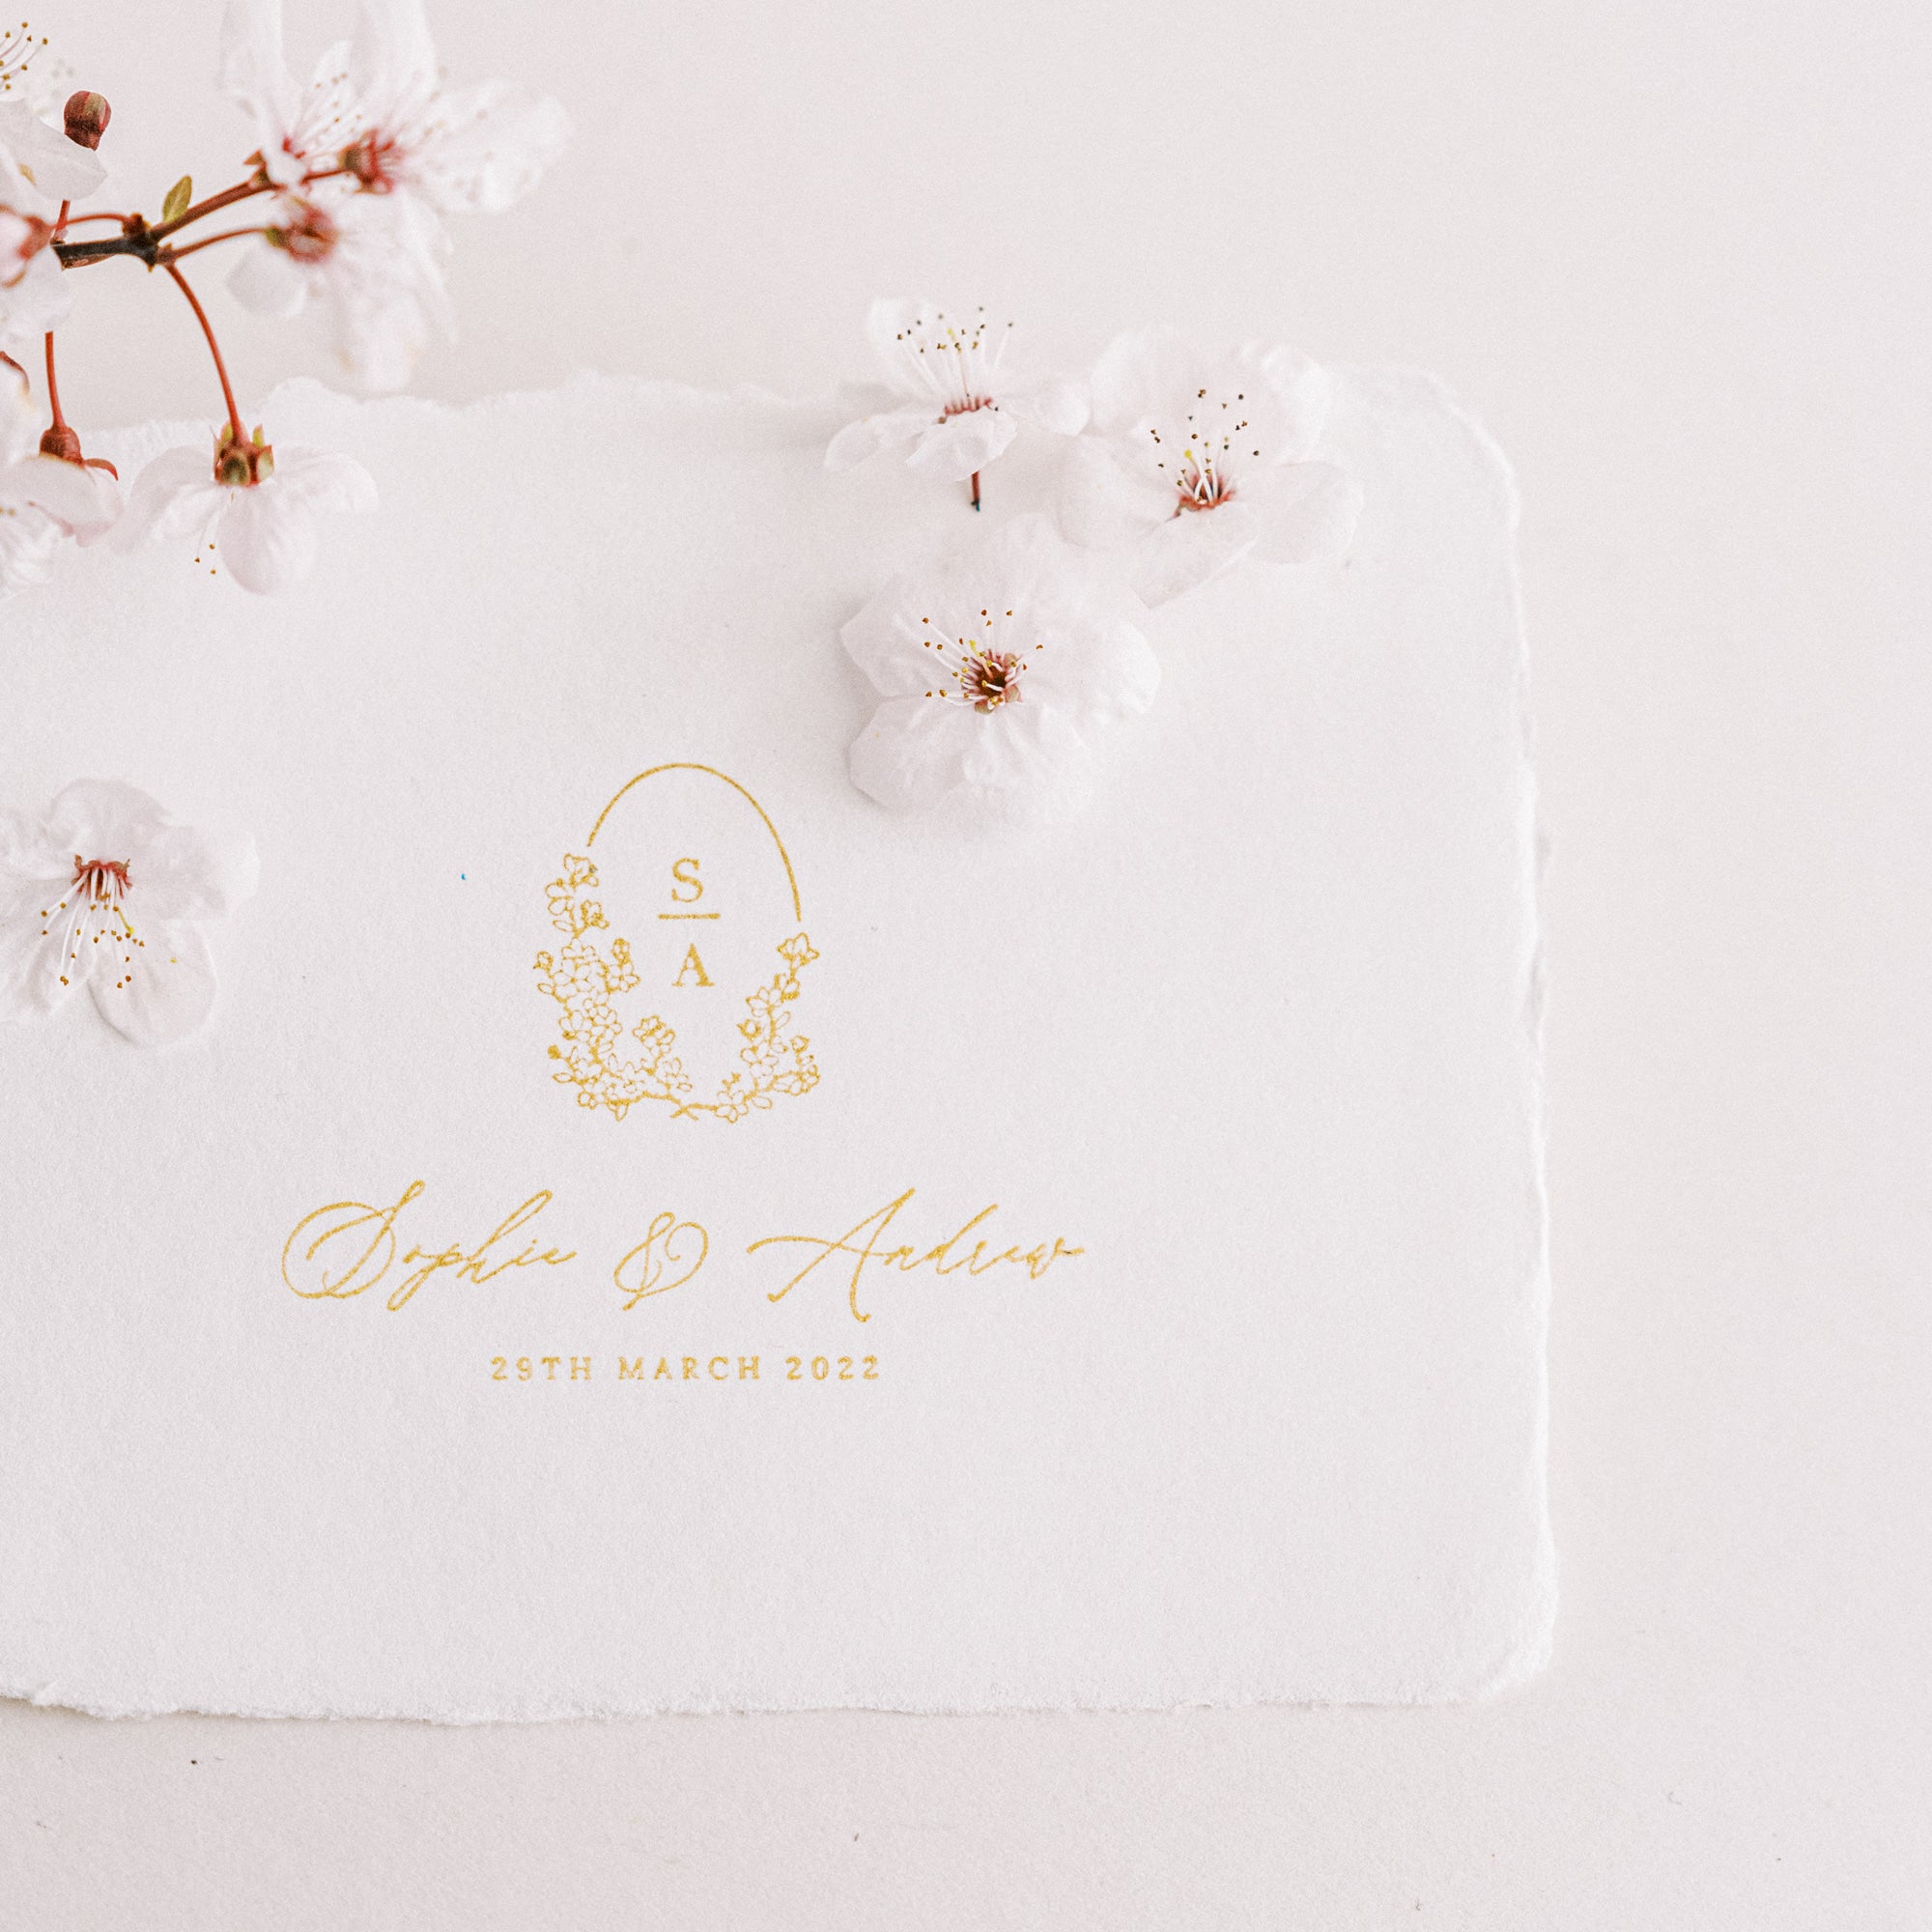 Cherri Cherry Blossom Monogram Save The Date Rubber Stamp for Fine Art Weddings | | 'Sakura' Cherry Blossom Embellishments for Blush Pink Spring Wedding | Heirloom Seals